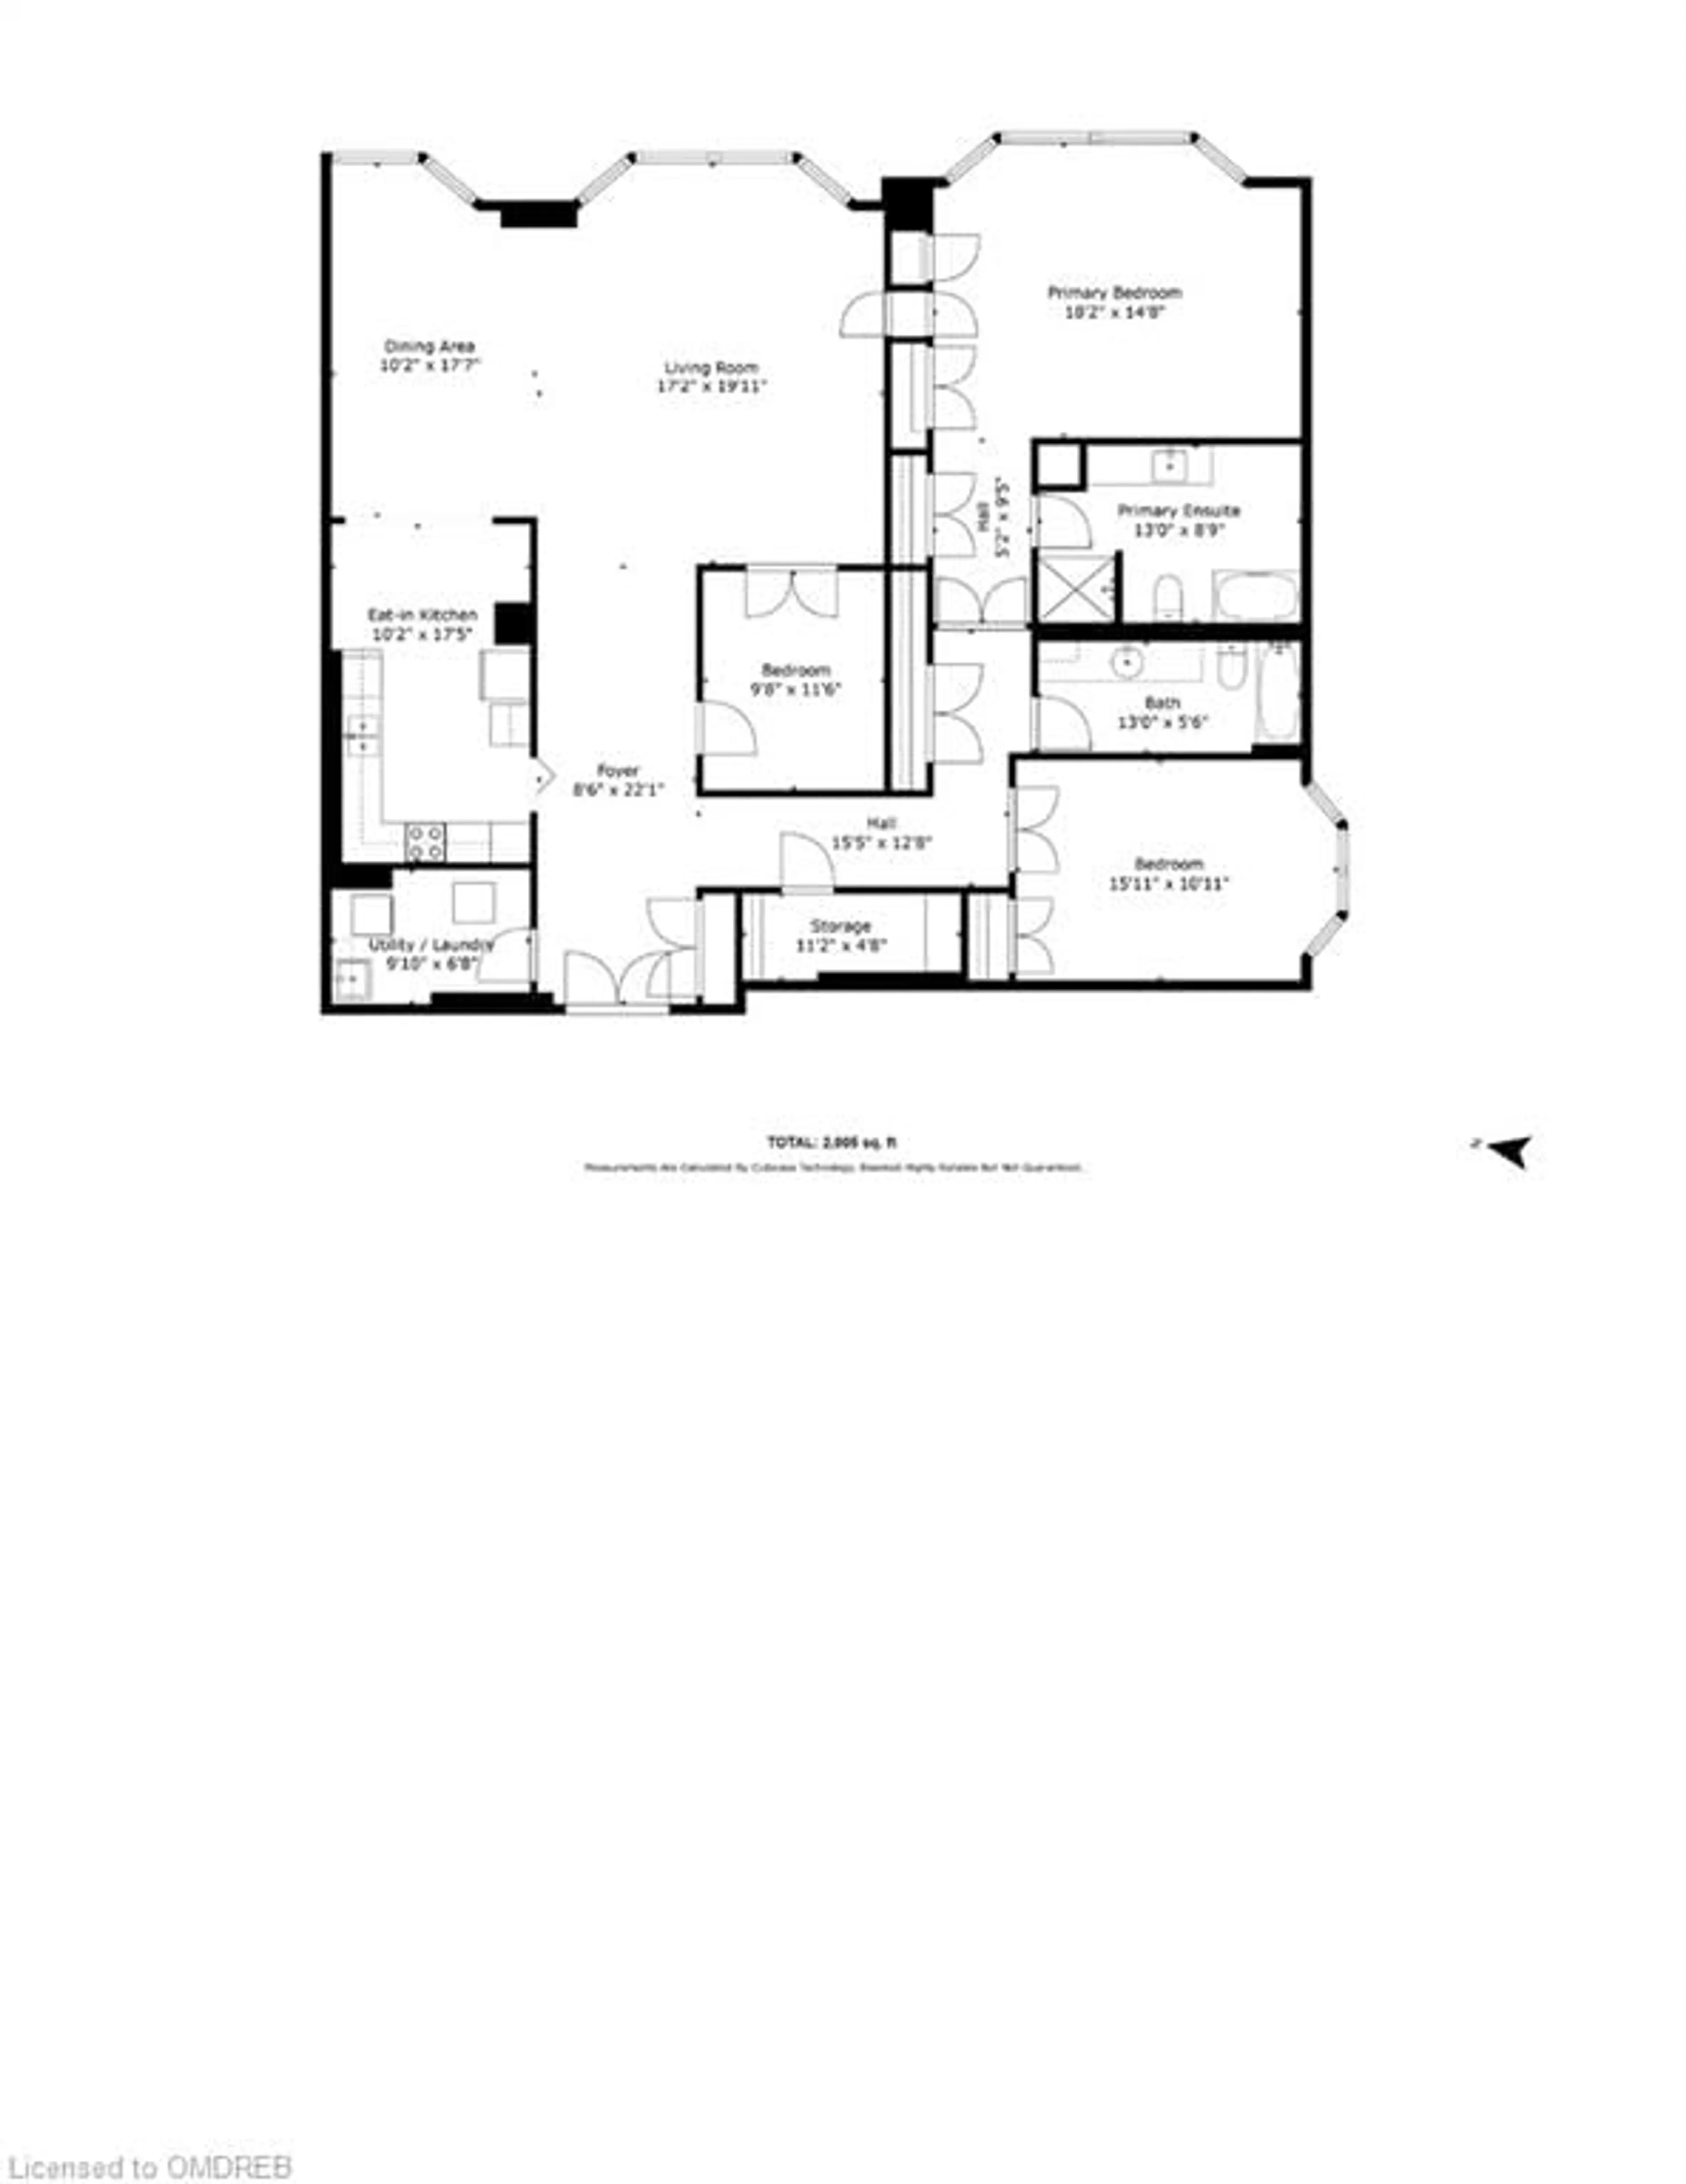 Floor plan for 1166 Bay St #703, Toronto Ontario M5S 2X8